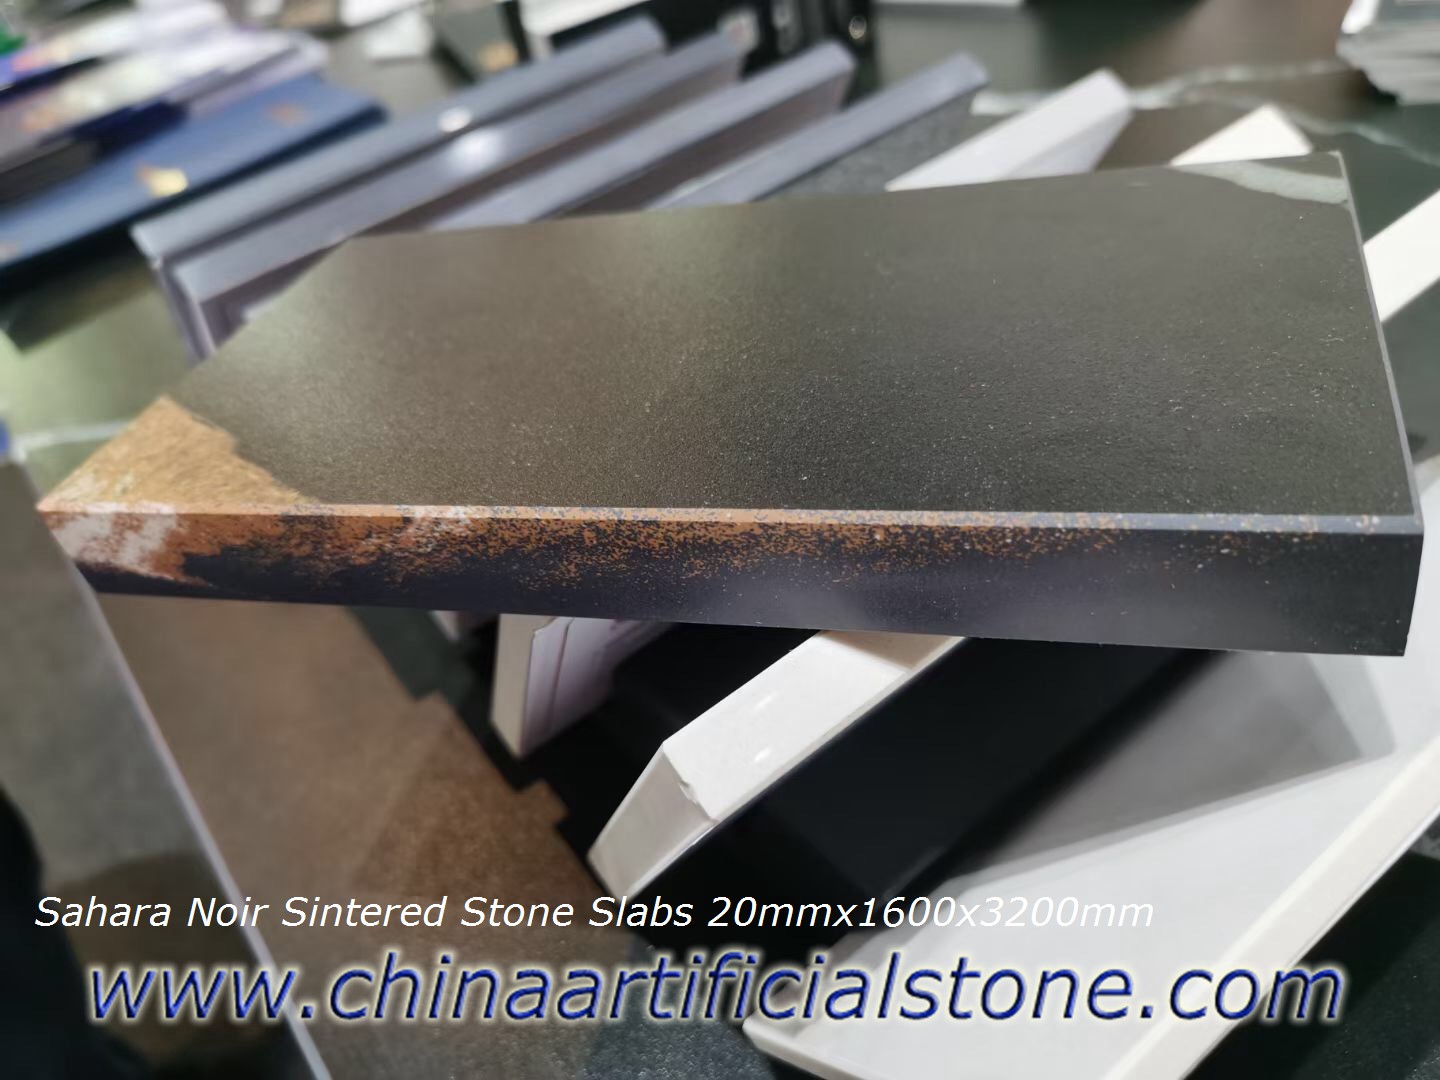 20mm Sahara Noir Sintered Stone Marble Slabs 1600x3200mm